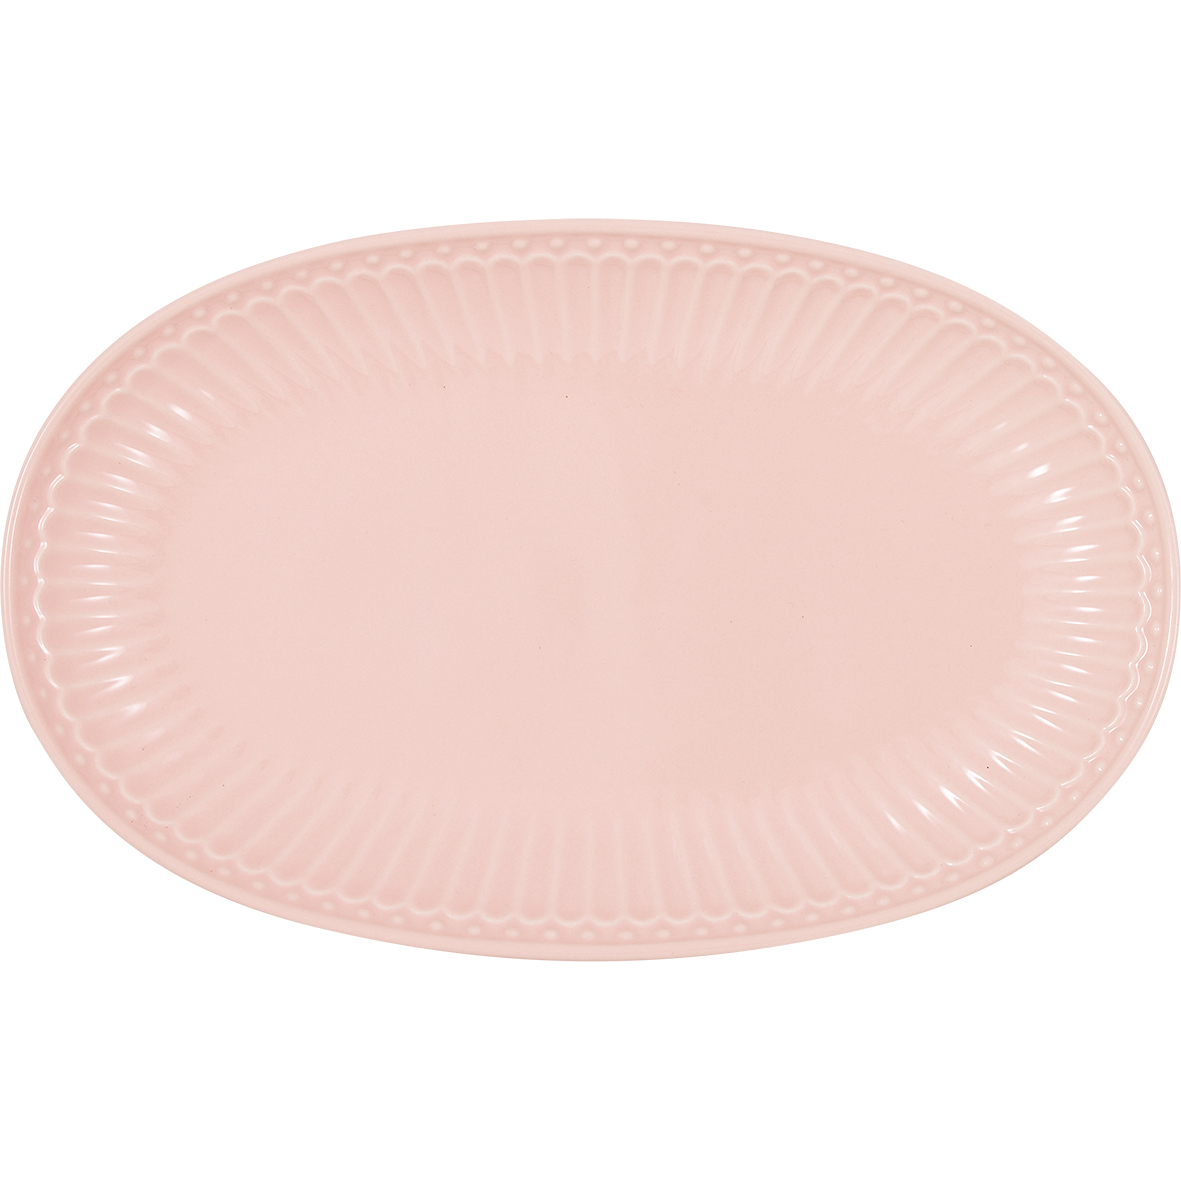 Greengate ovaler Teller/Servierplatte Bisquit Plate Alice pale pink